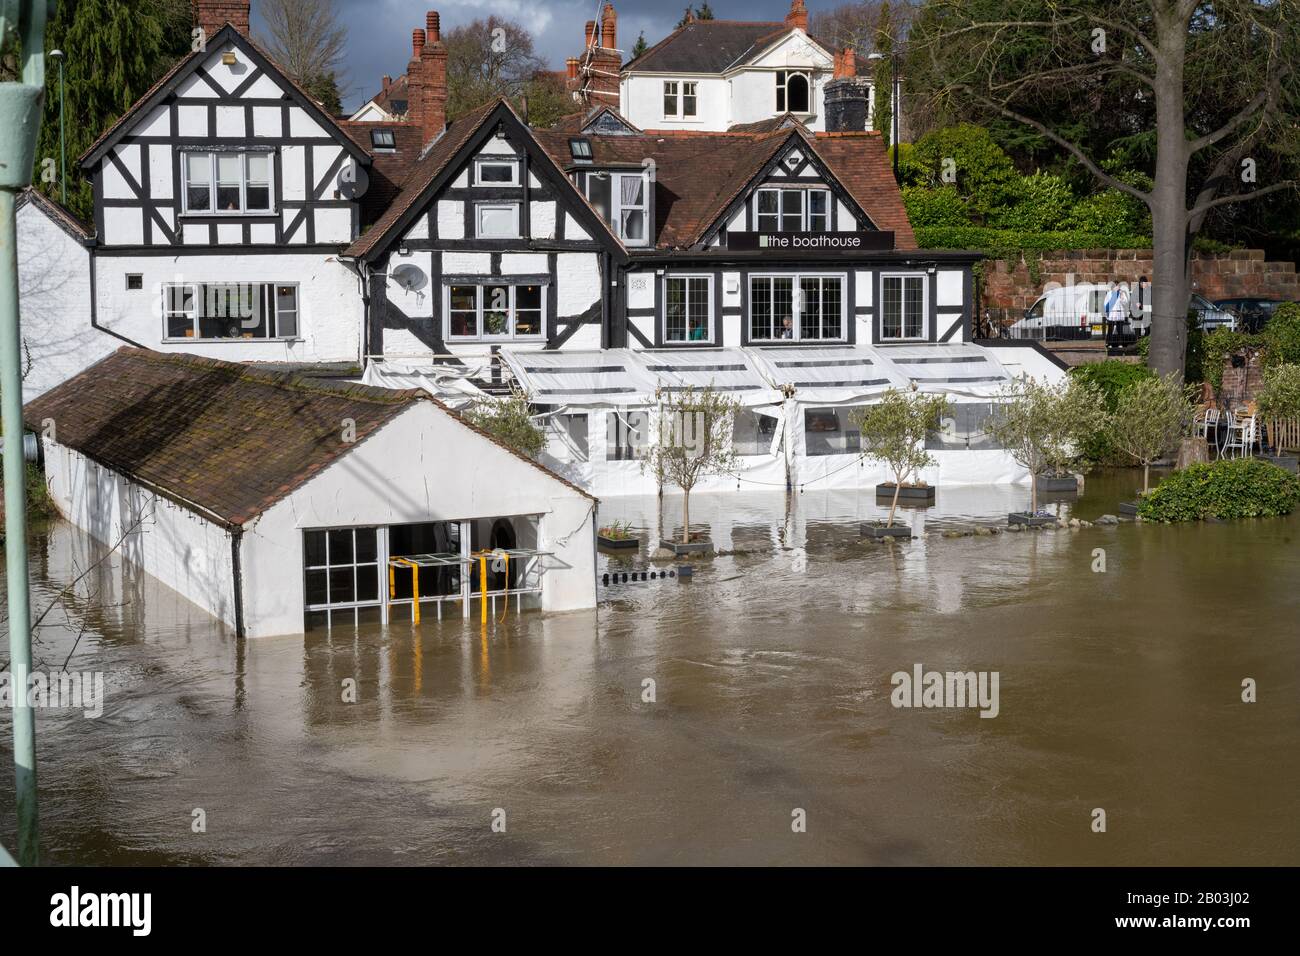 Flooding of the River Severn in Shrewsbury, UK. Flooding The Boathouse Pub. Stock Photo